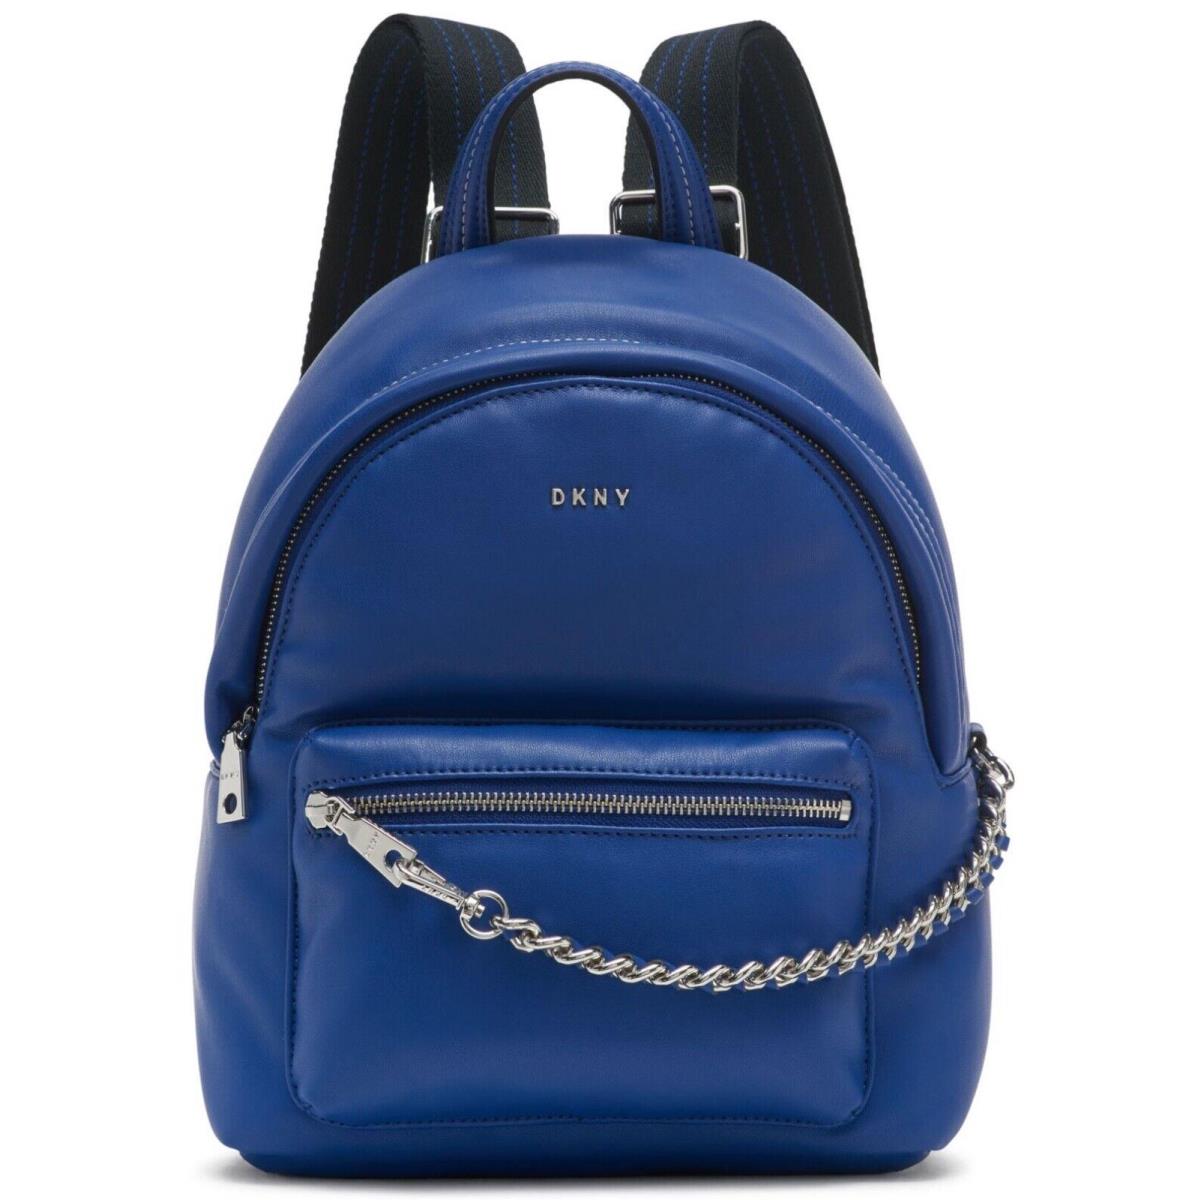 Dkny Quinn Backpack Royale Blue